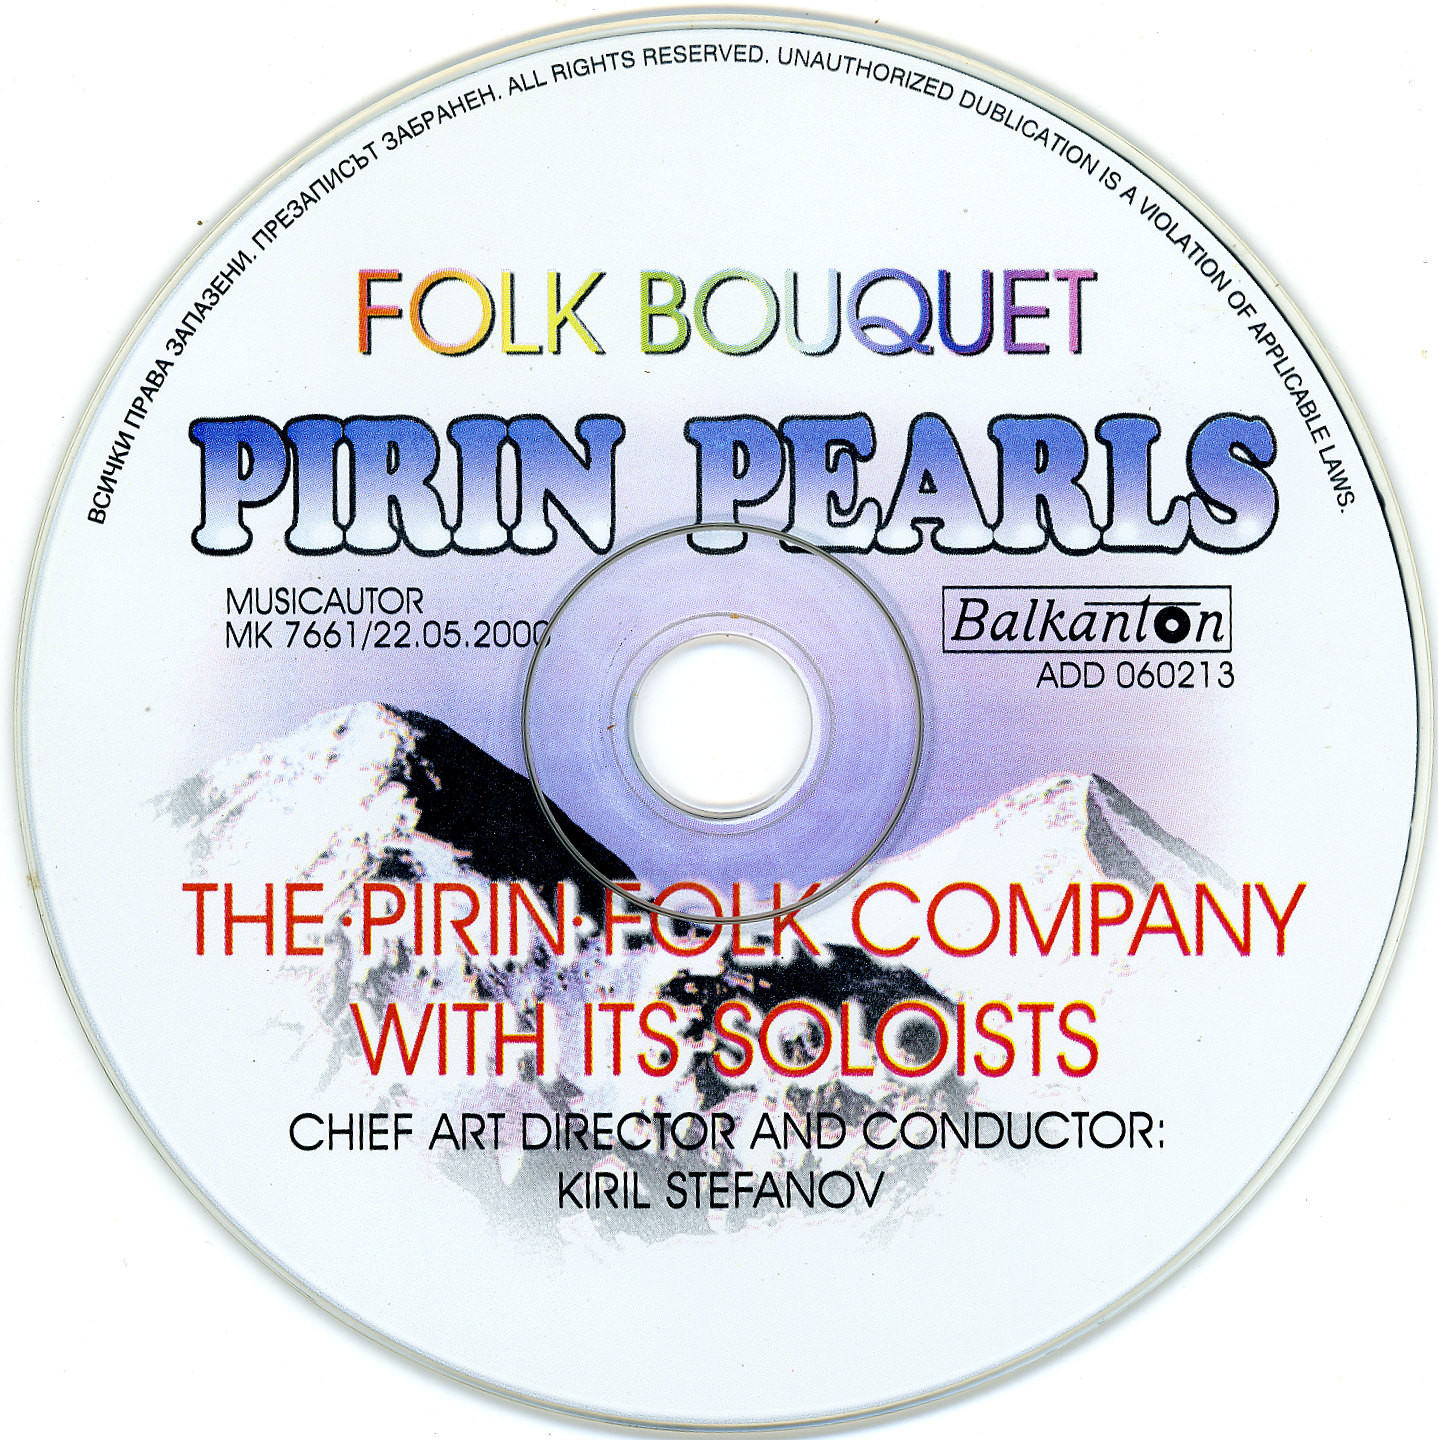 Folk Bouquet Pirin Pearls. The Pirin Folk Company with its soloists.